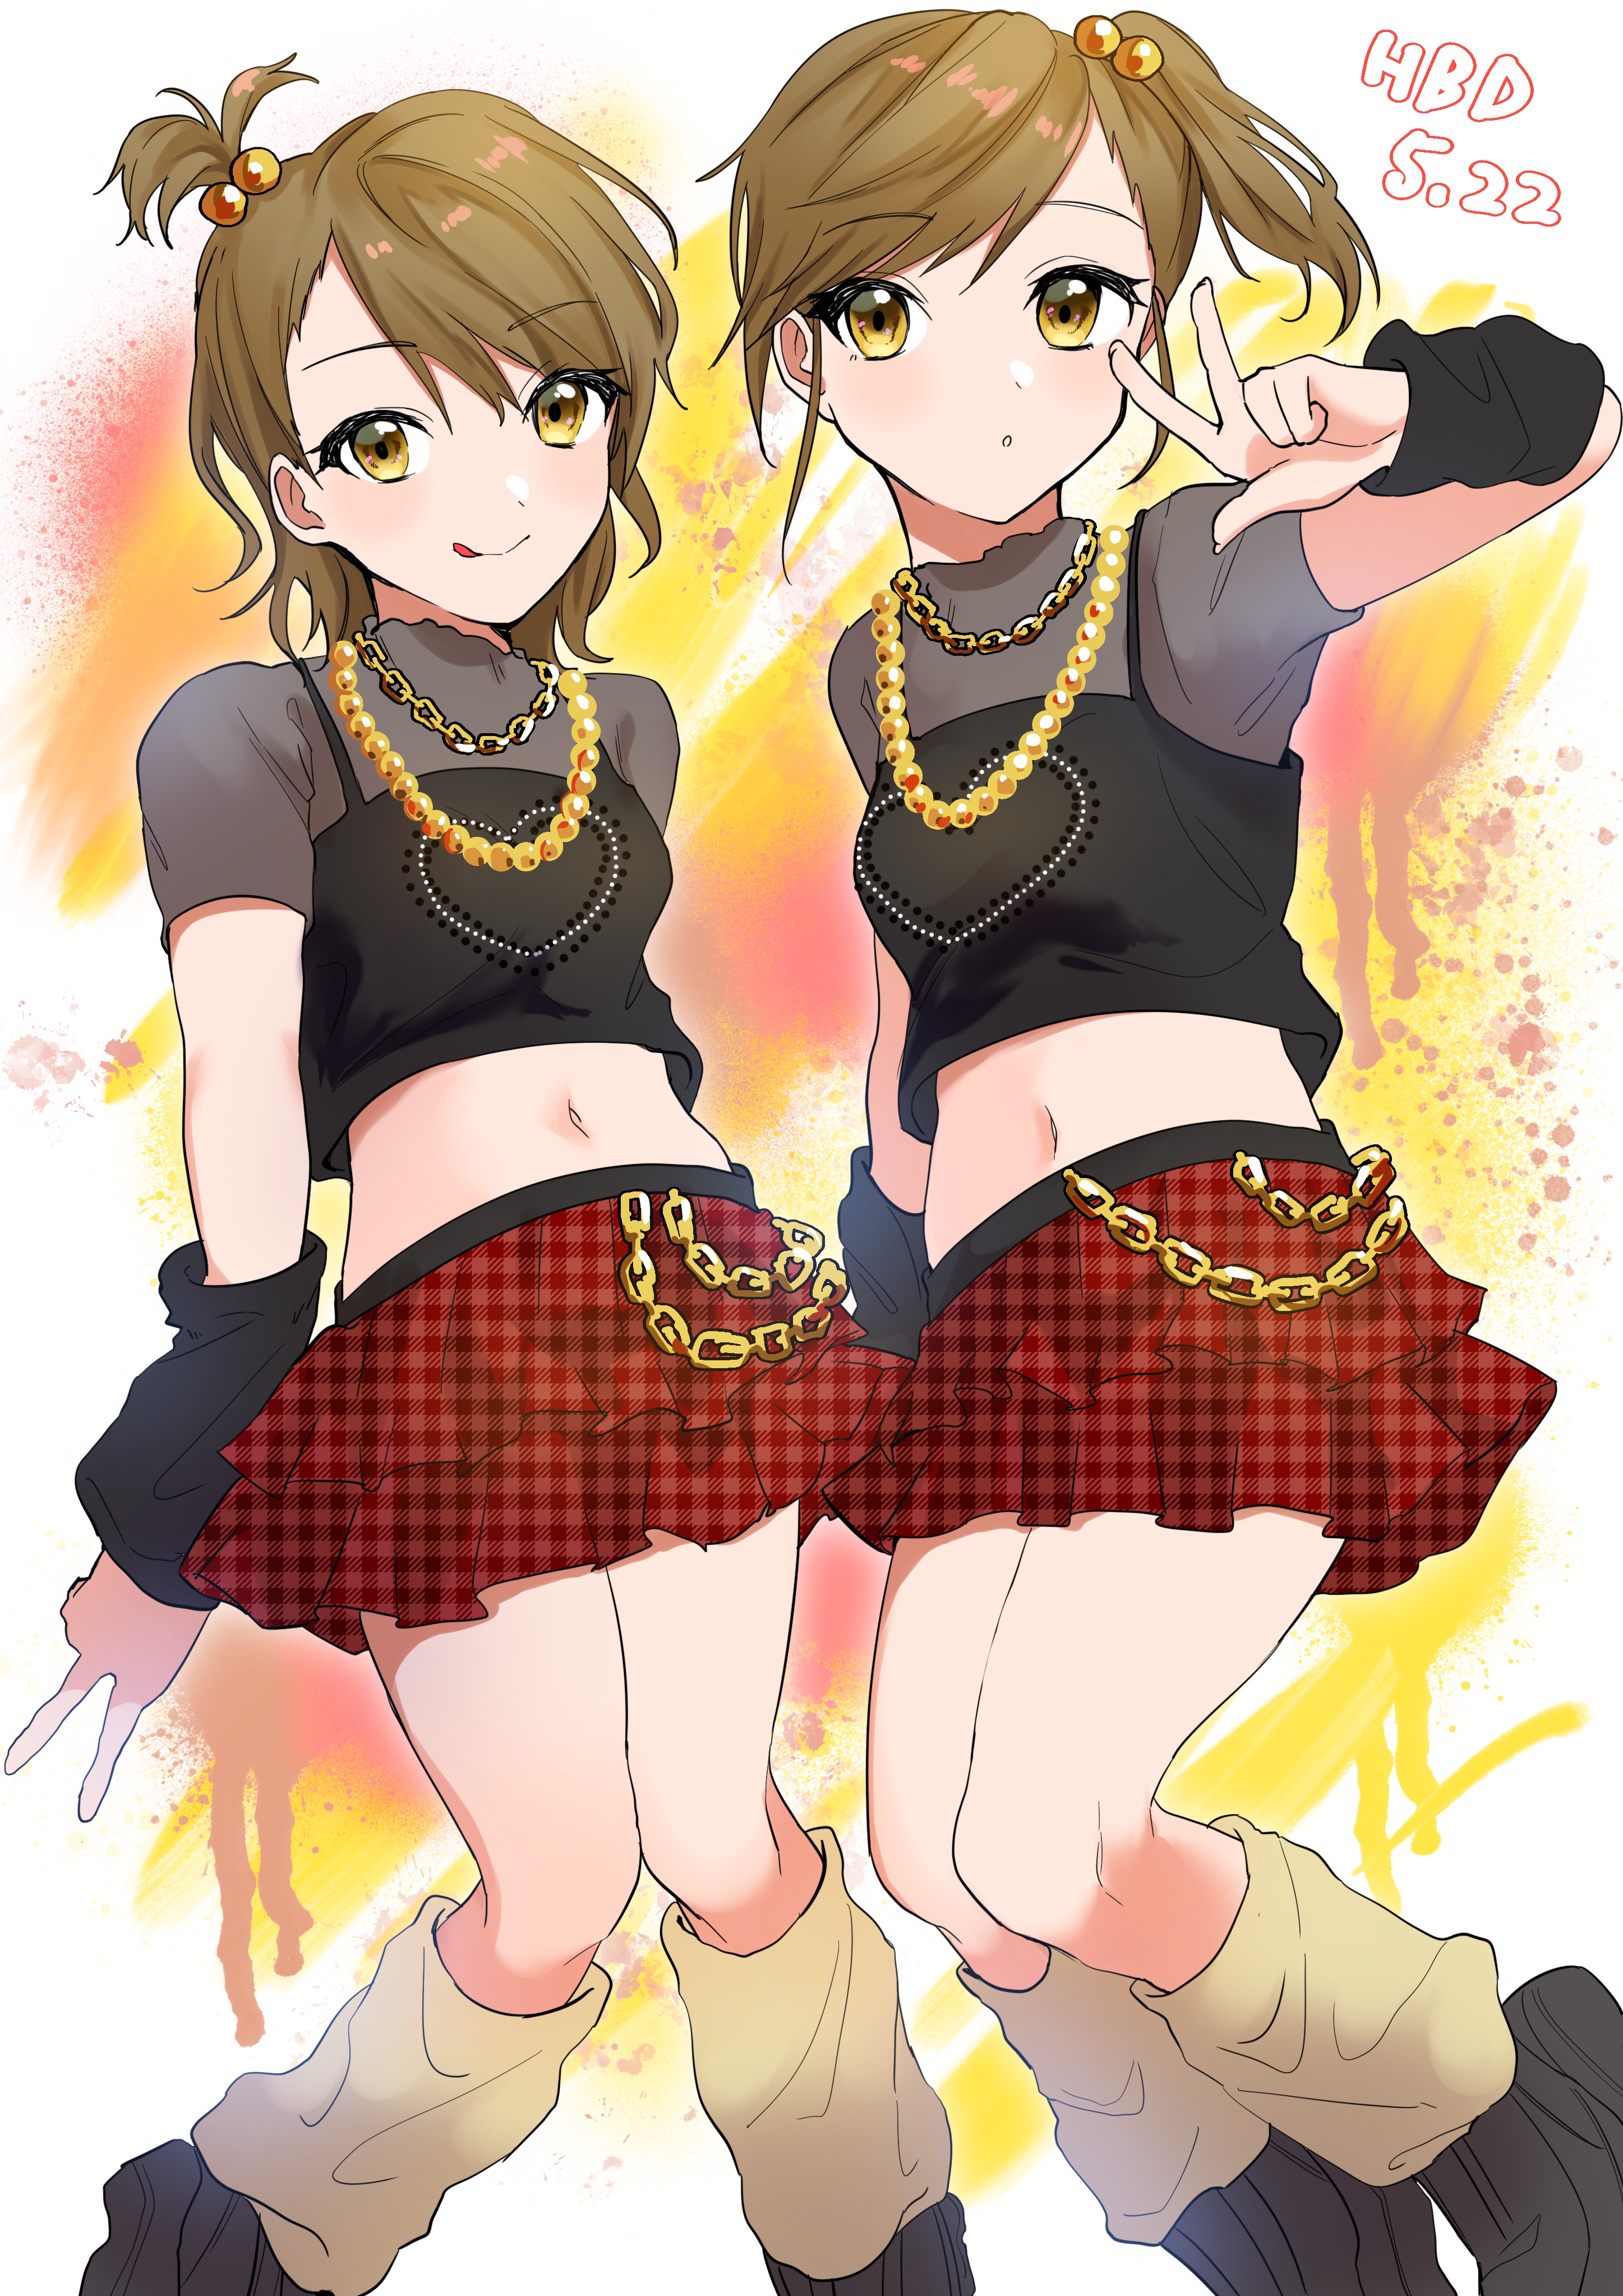 Anime 2894x4093 anime anime girls THE iDOLM@STER Futami Ami Futami Mami long sleeves brunette twins two women artwork digital art fan art